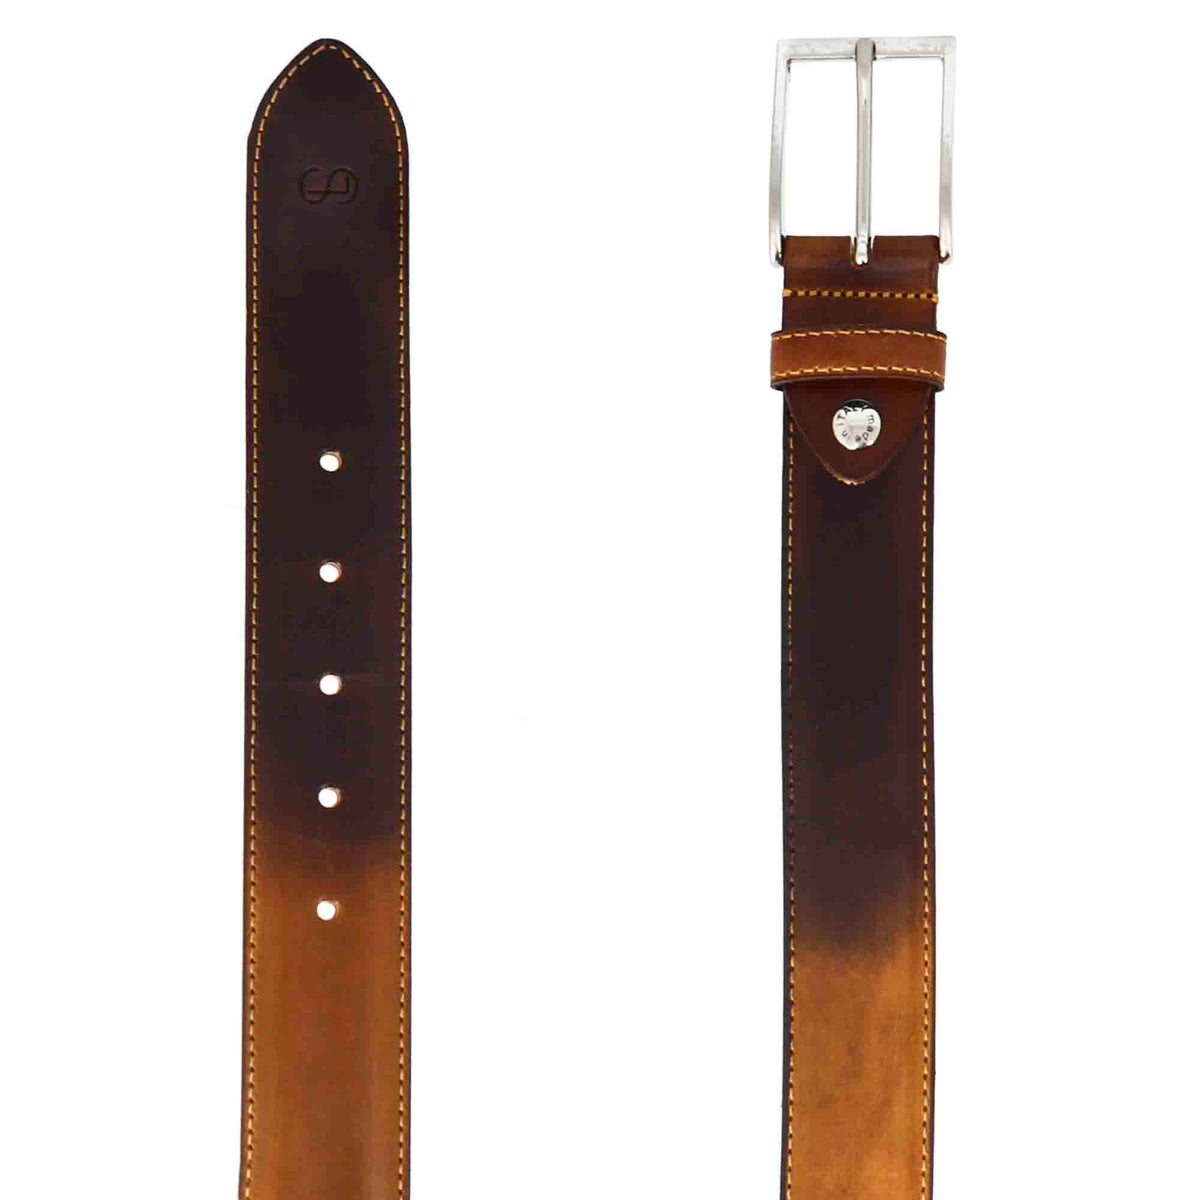 Dark brown and light brown hand-colored elegant men's leather belt